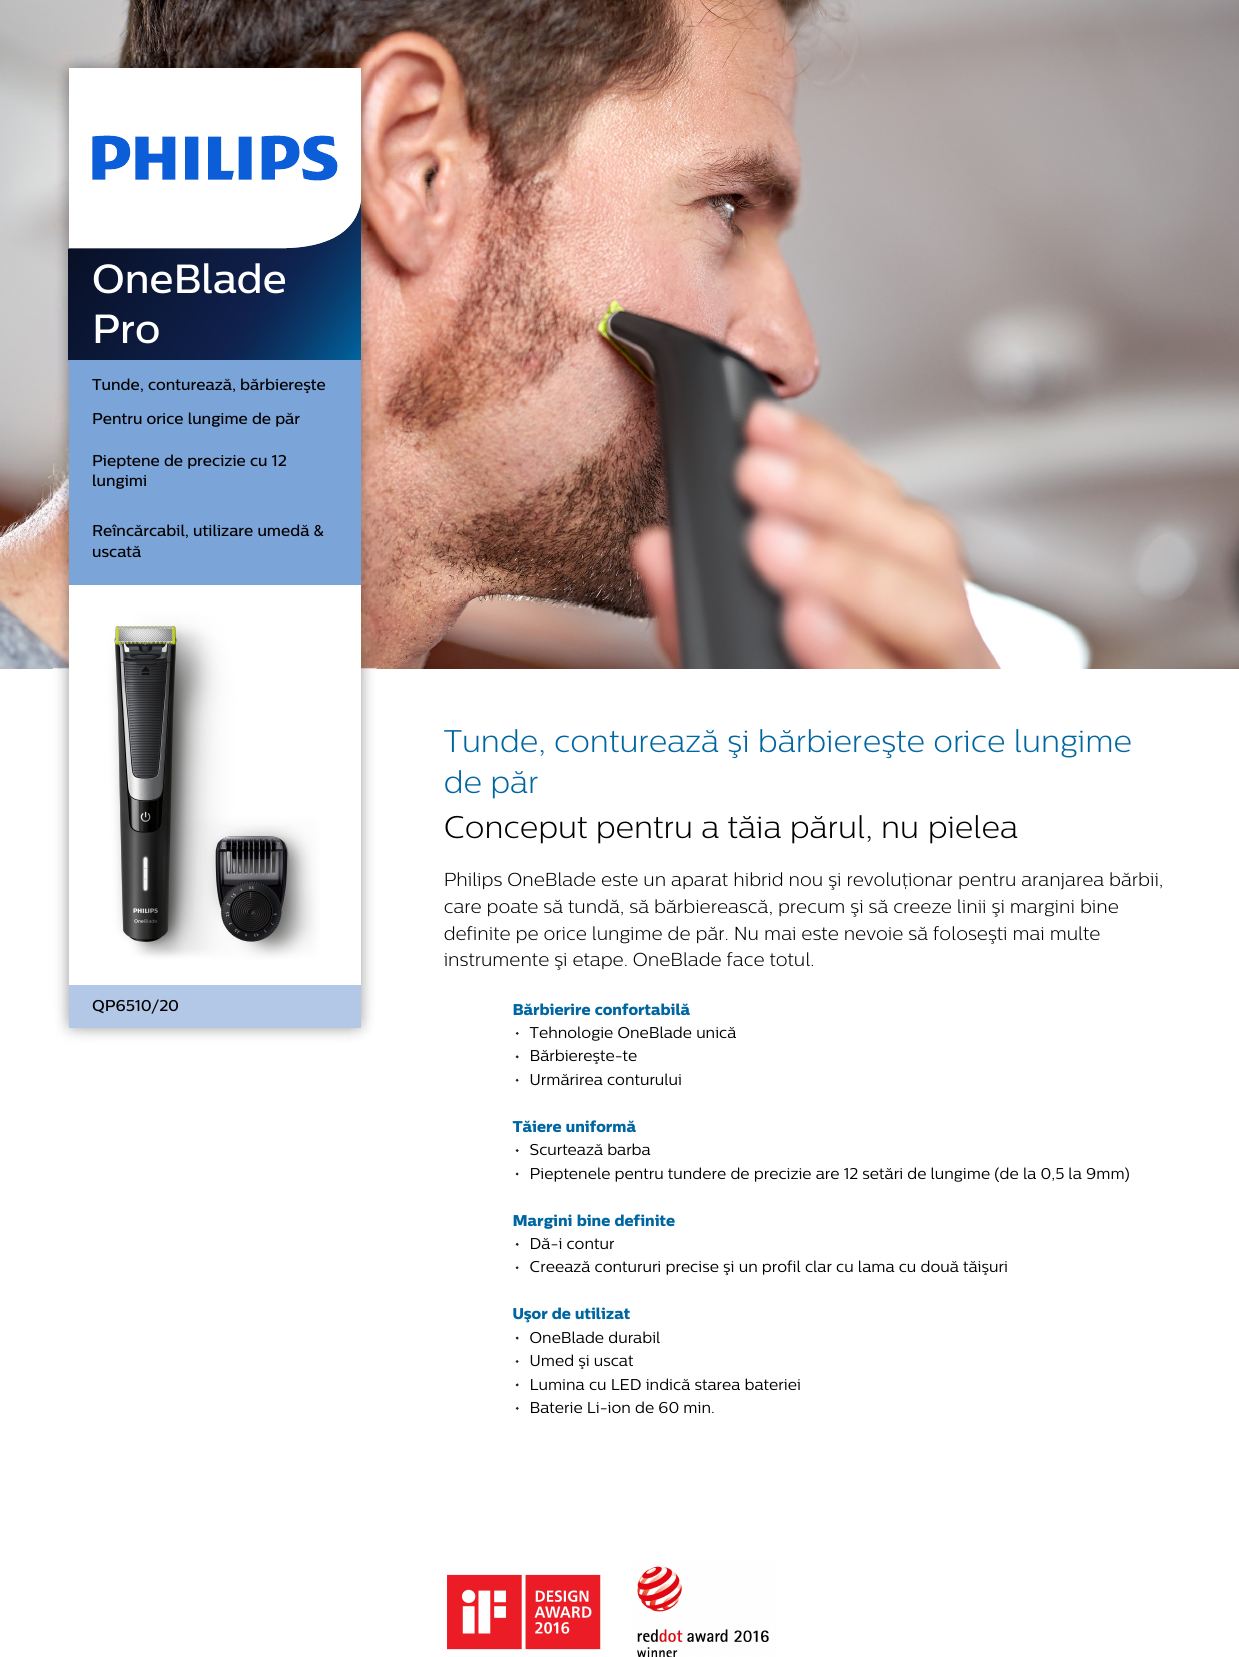 oneblade pro qp6510